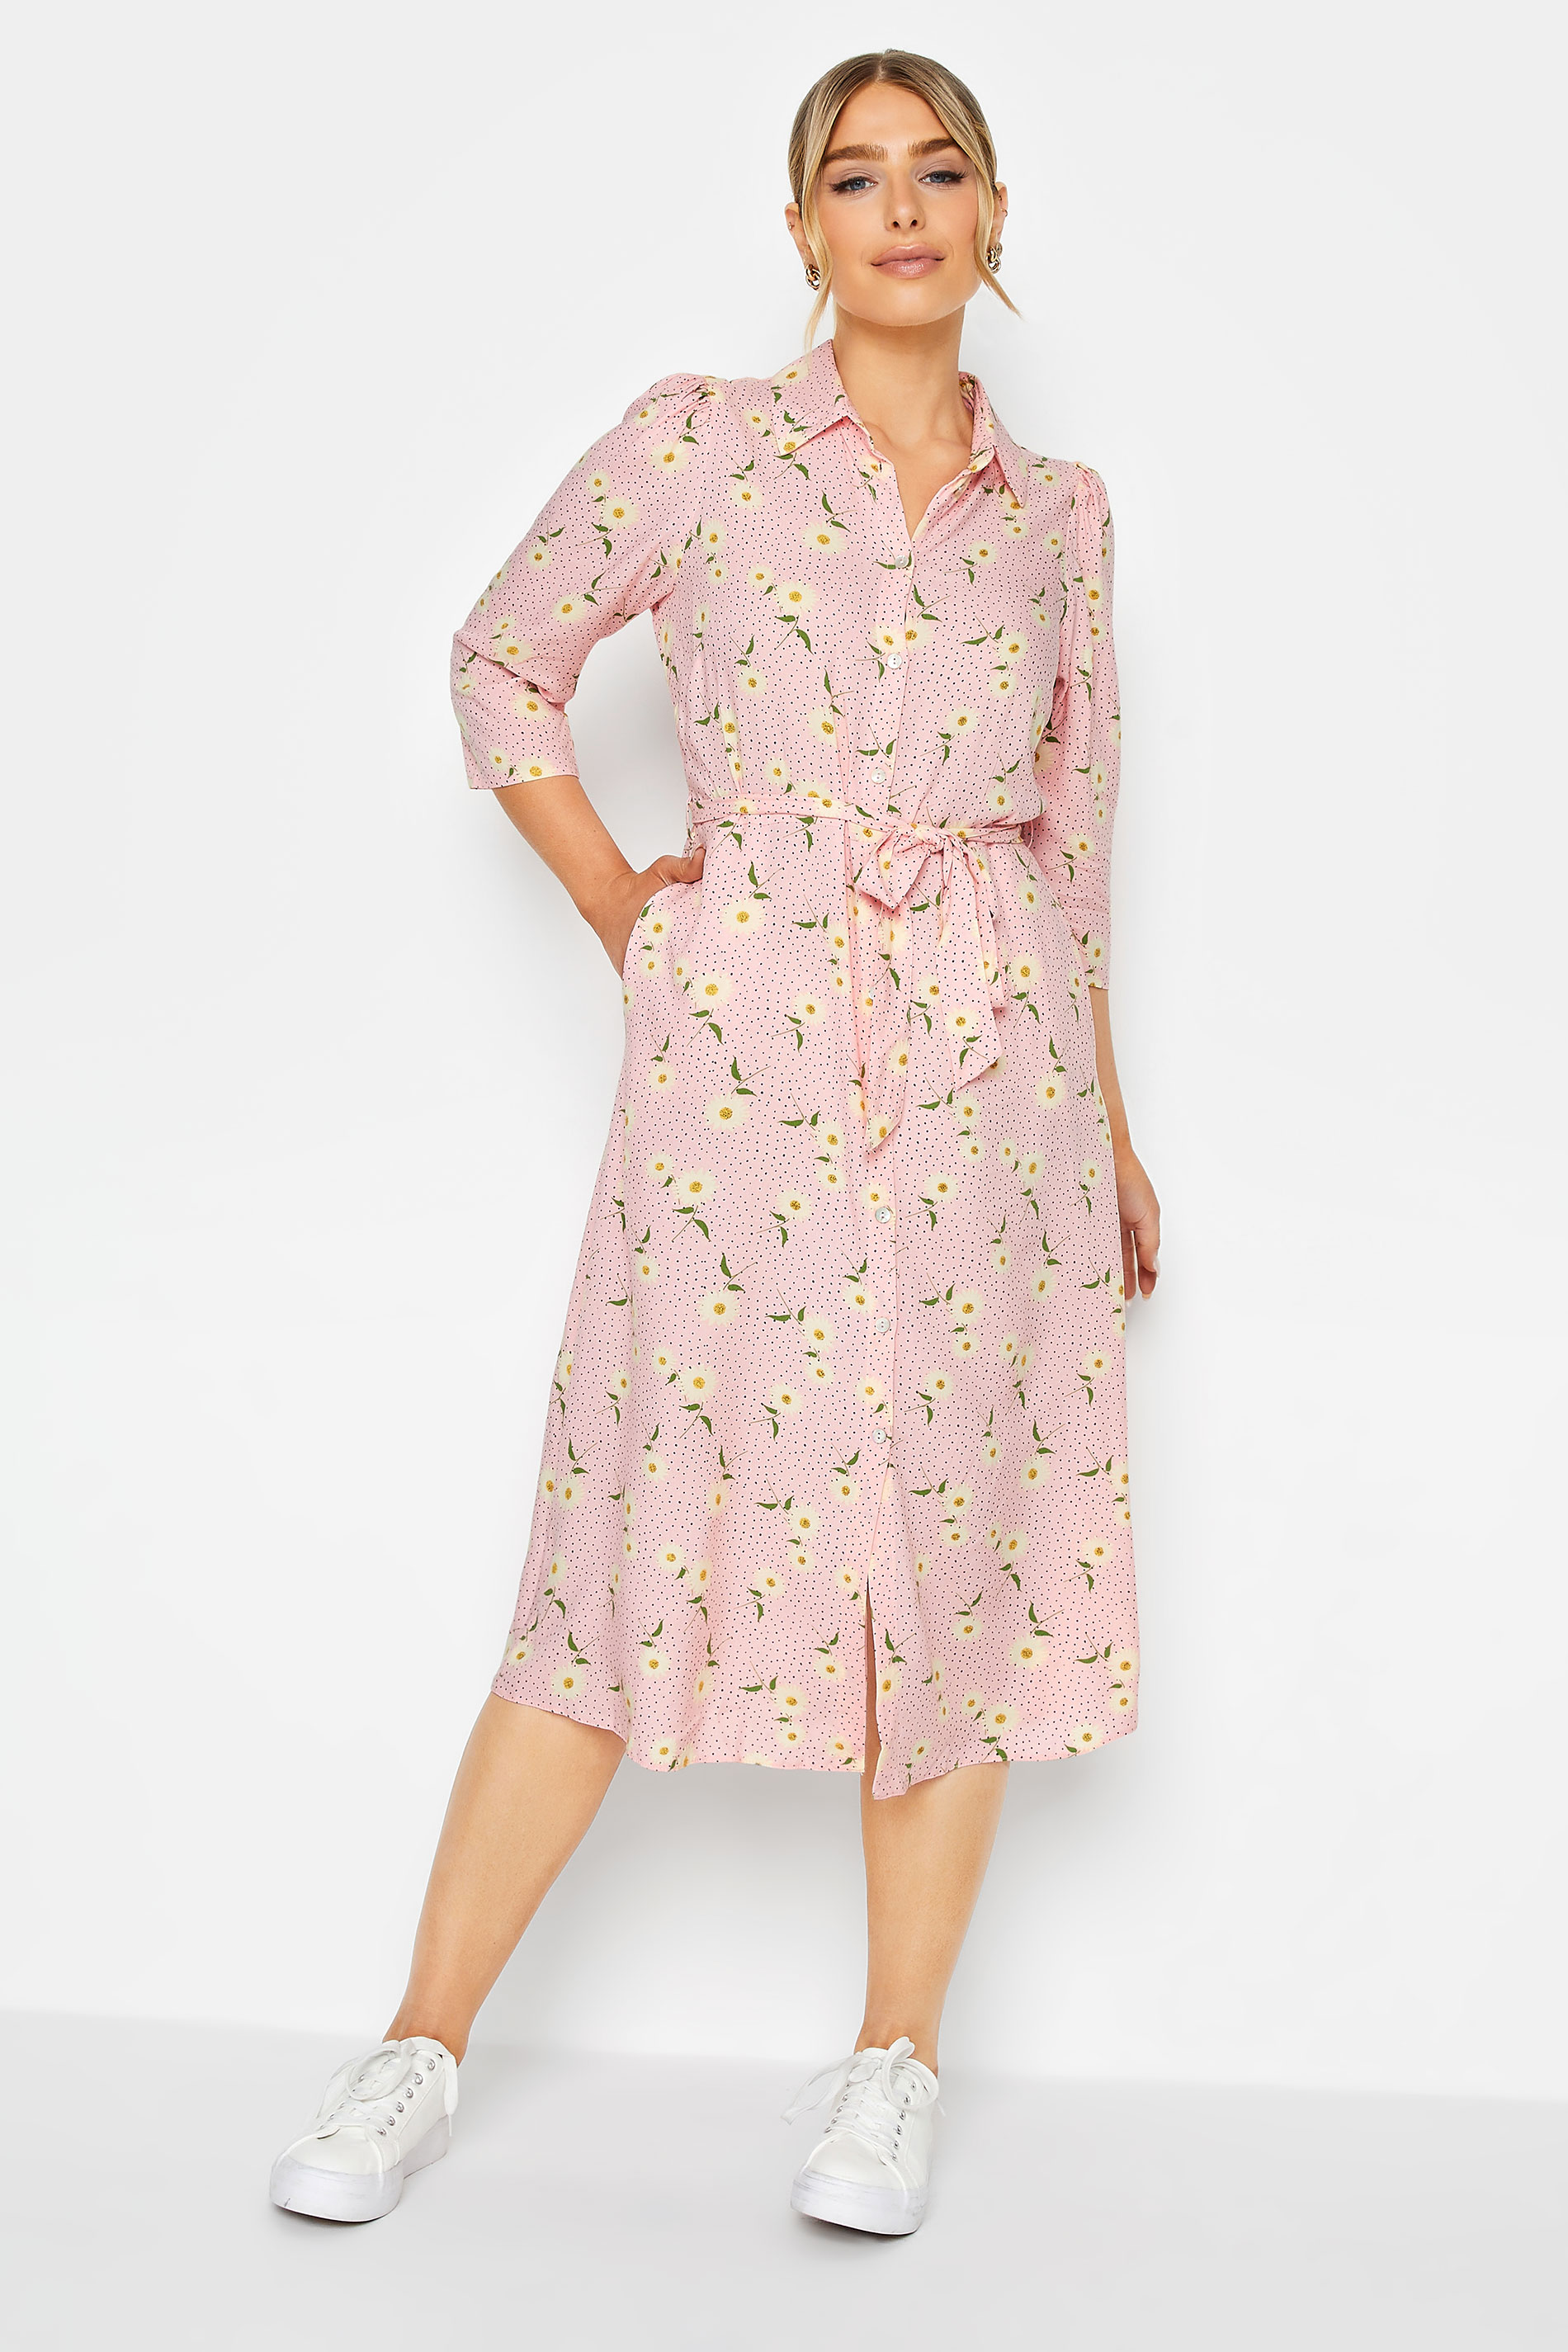 M&Co Pink Ditsy Floral Midi Shirt Dress | M&Co 1